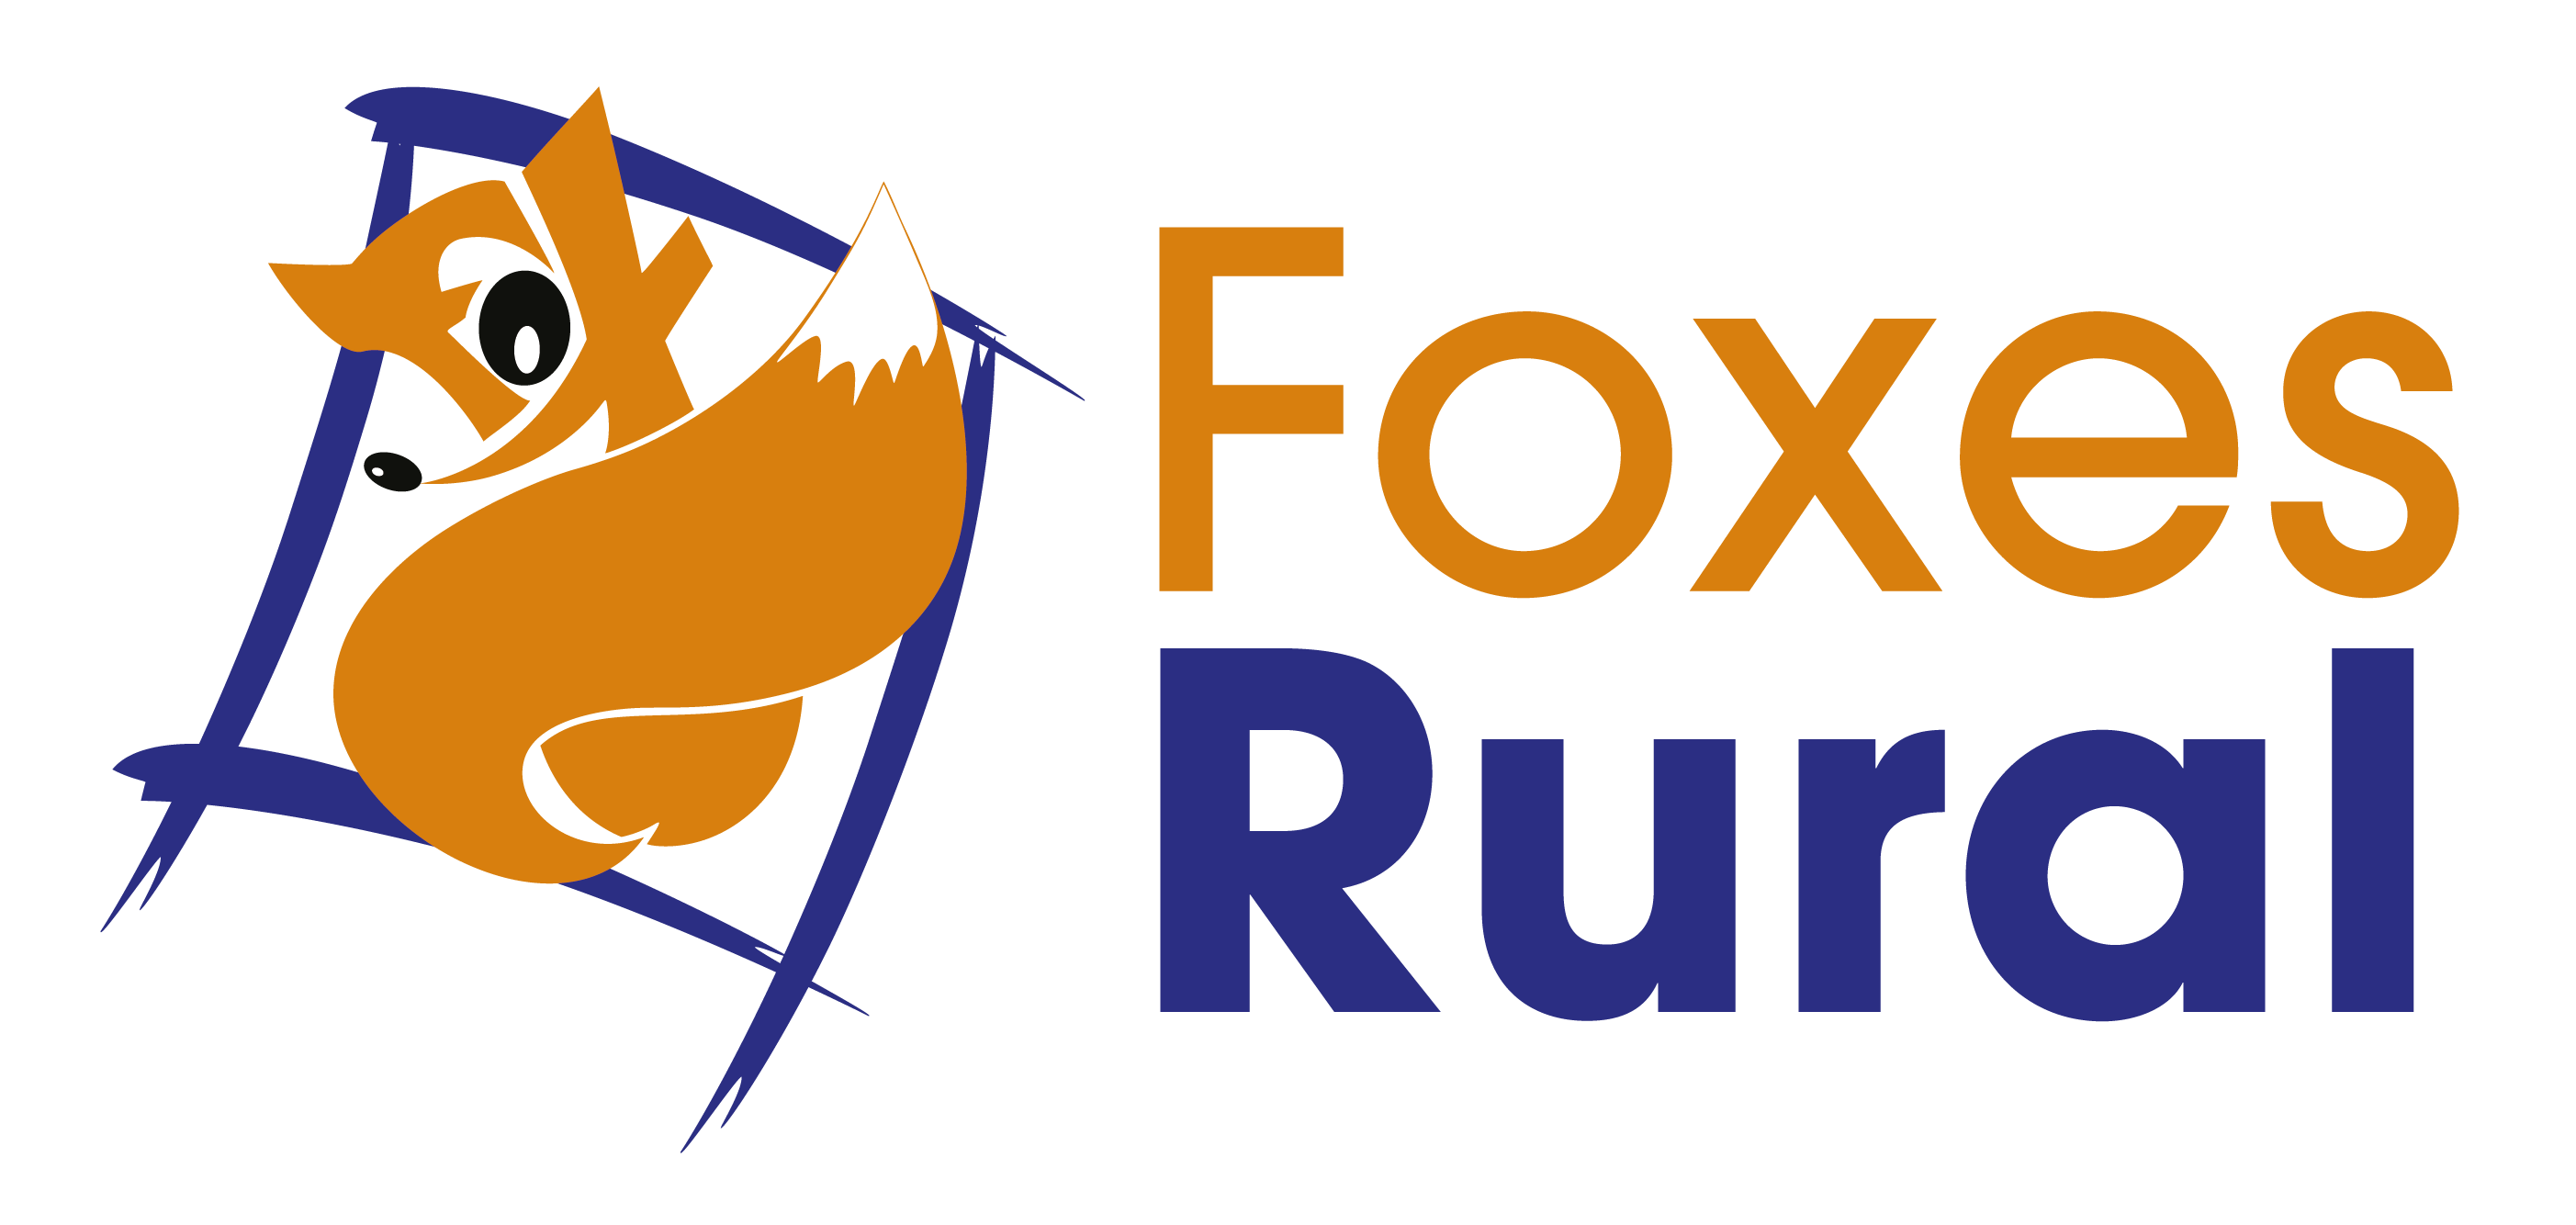 Foxes rural logo